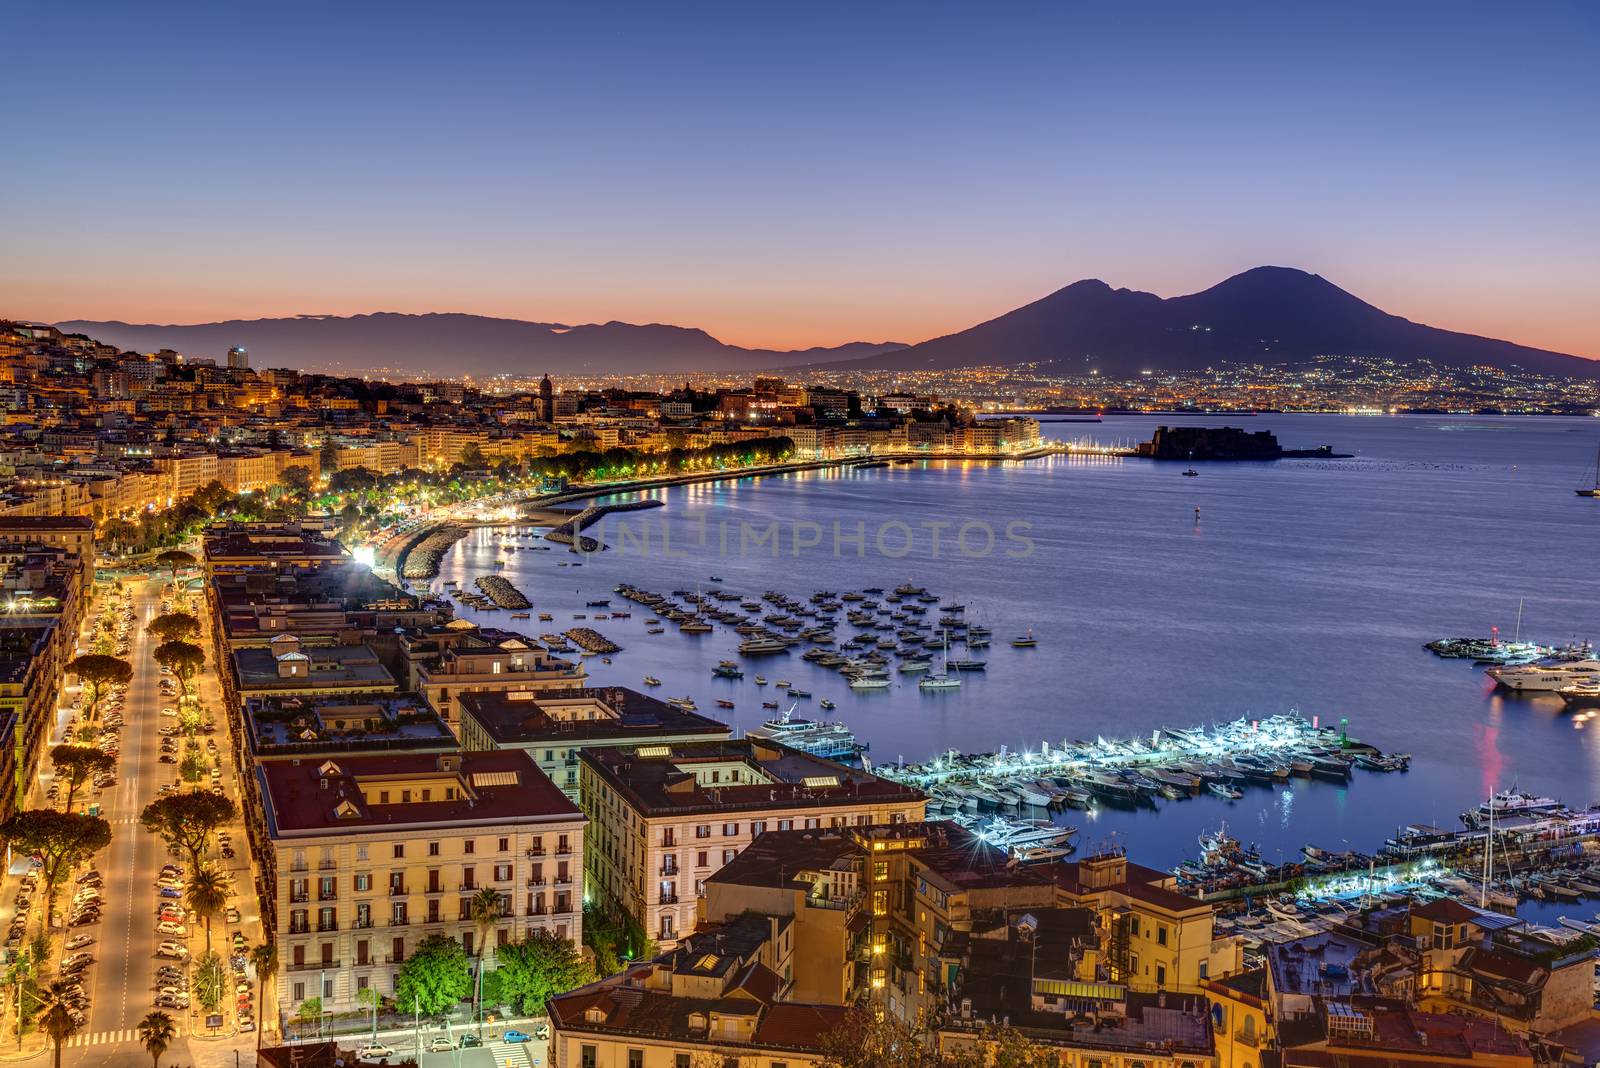 Naples and Mount Vesuvius in Italy by elxeneize